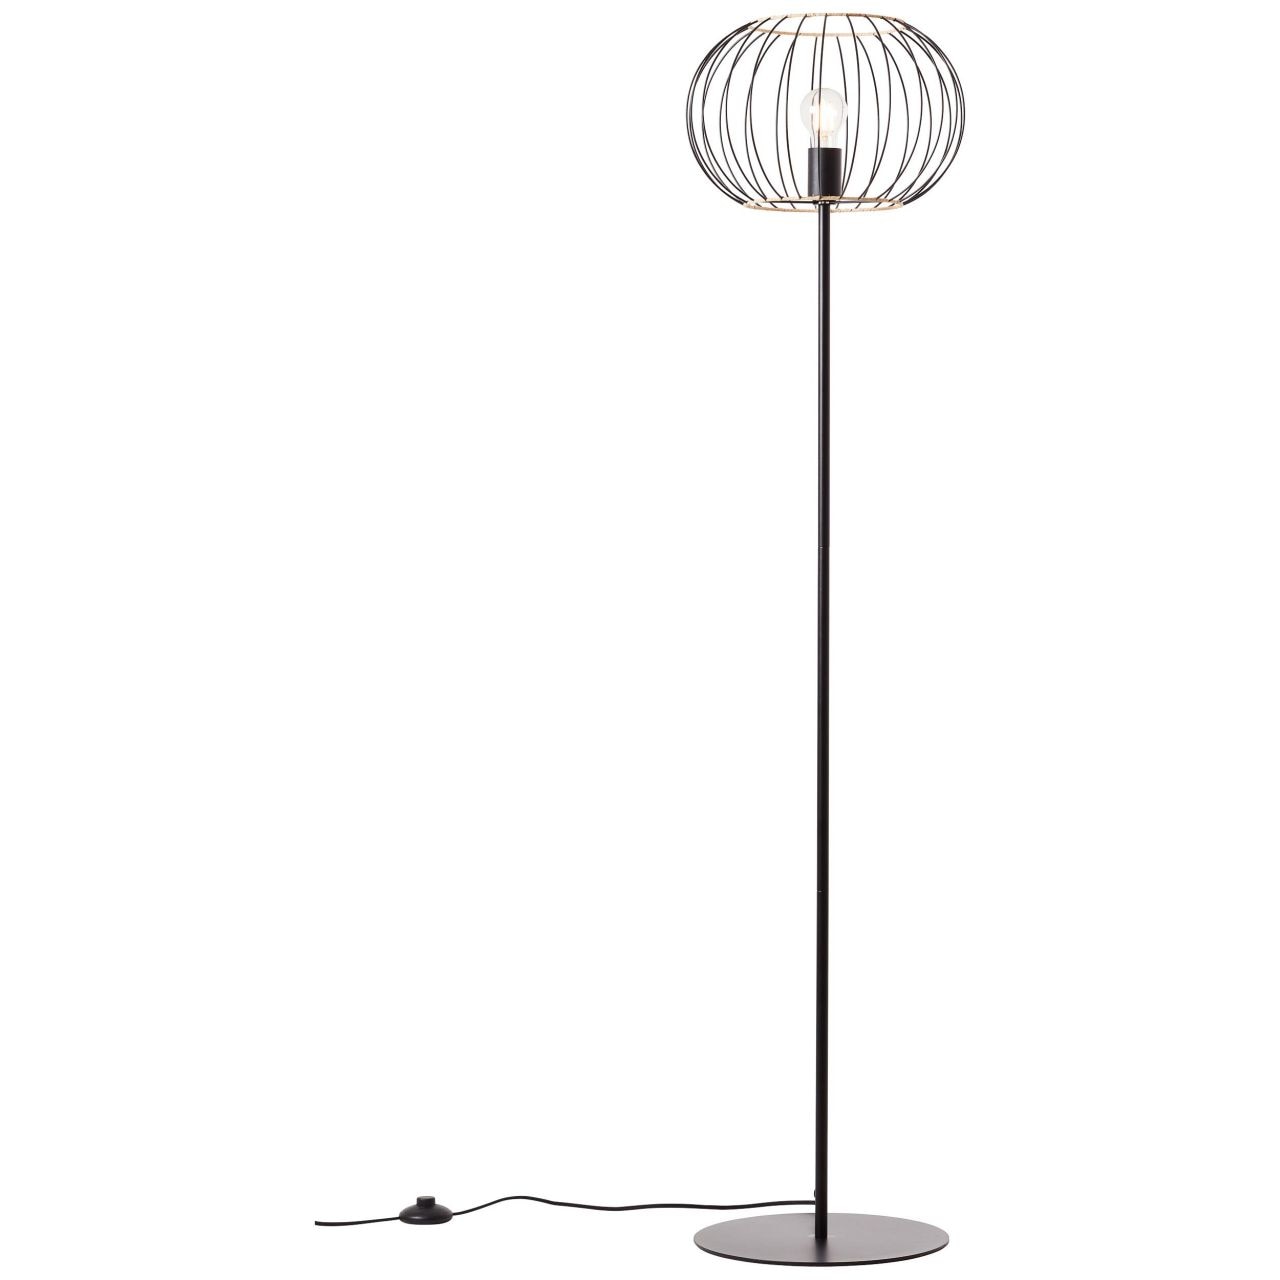 Brilliant Stehlampe »Silemia«, 1 flammig-flammig, 151,5 cm Höhe, Ø 36 cm, E27, Metall/Rattan, schwarz matt